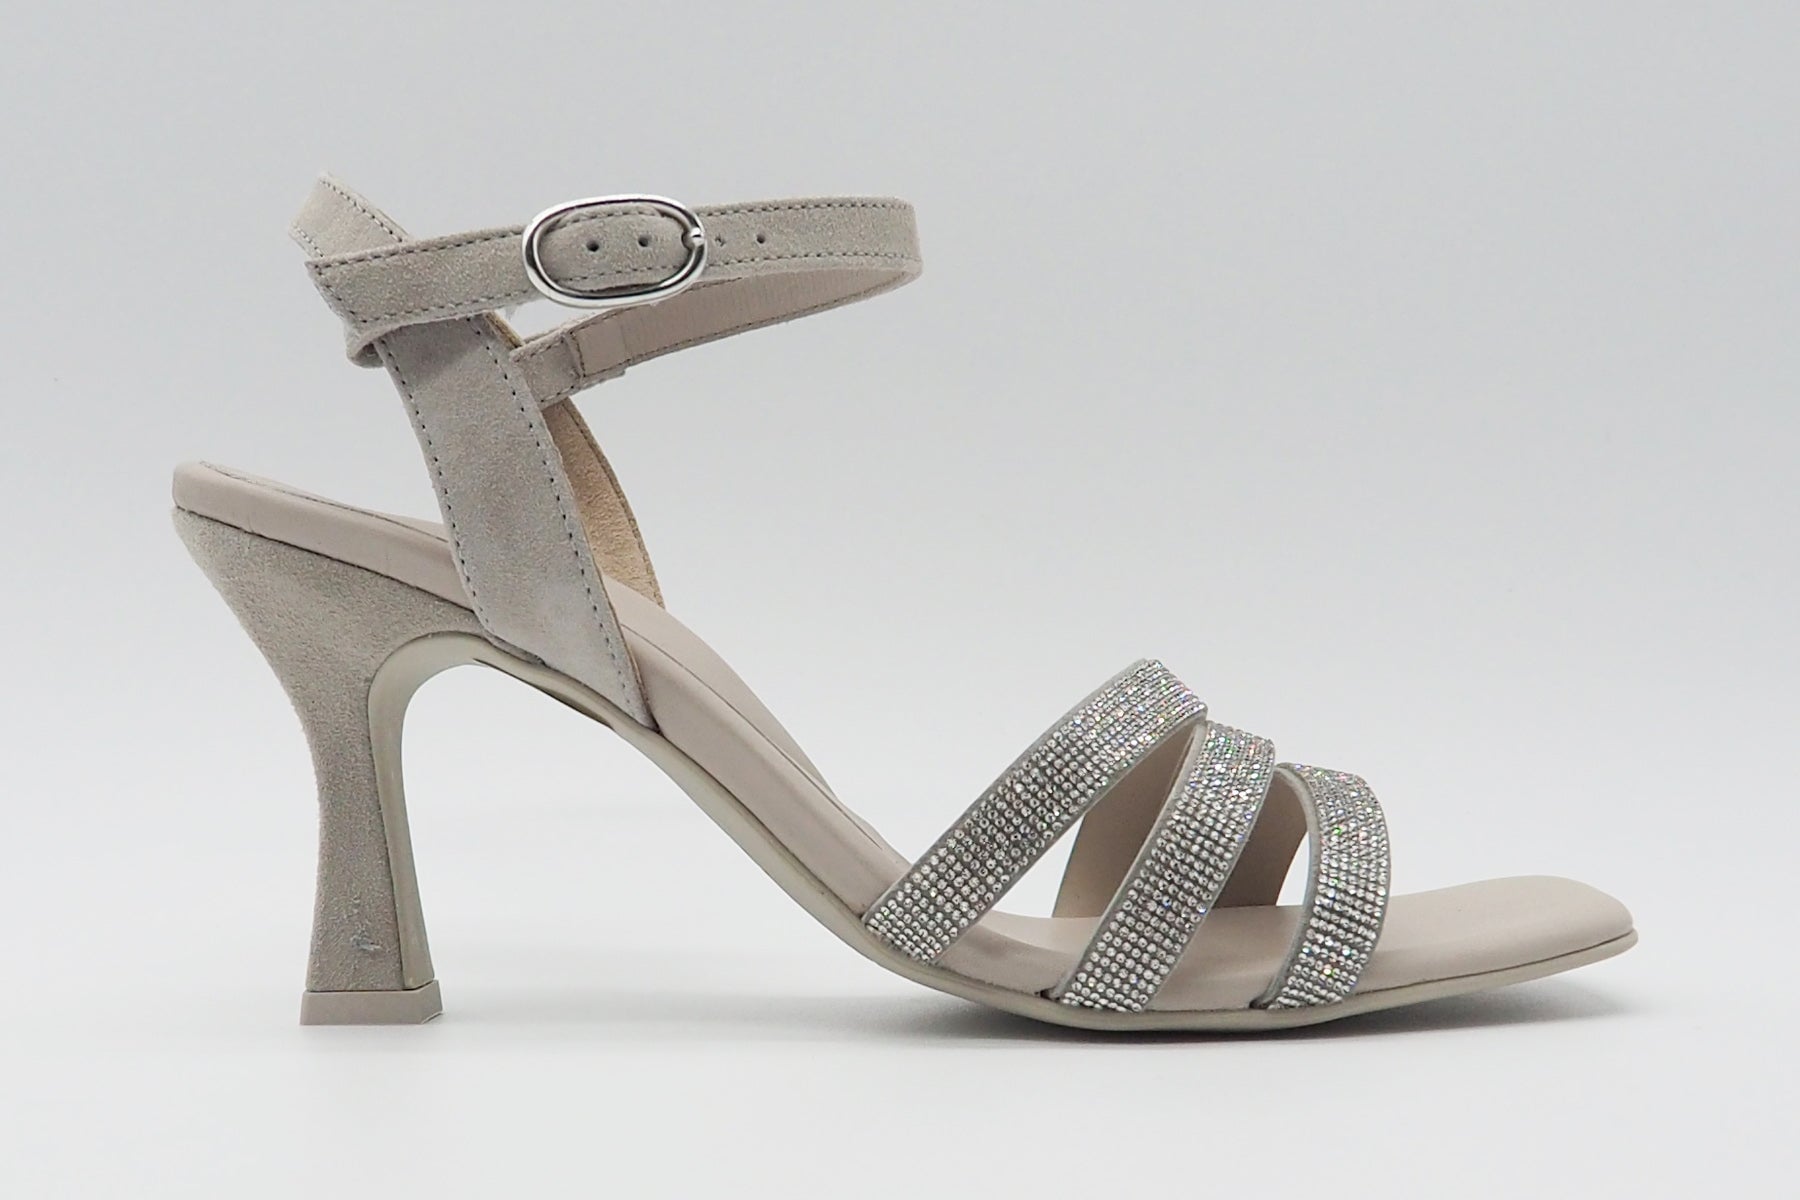 Damen Absatz-Sandale aus Veloursleder in Stone - Absatz 9cm Damen Sandalen Paul Green 